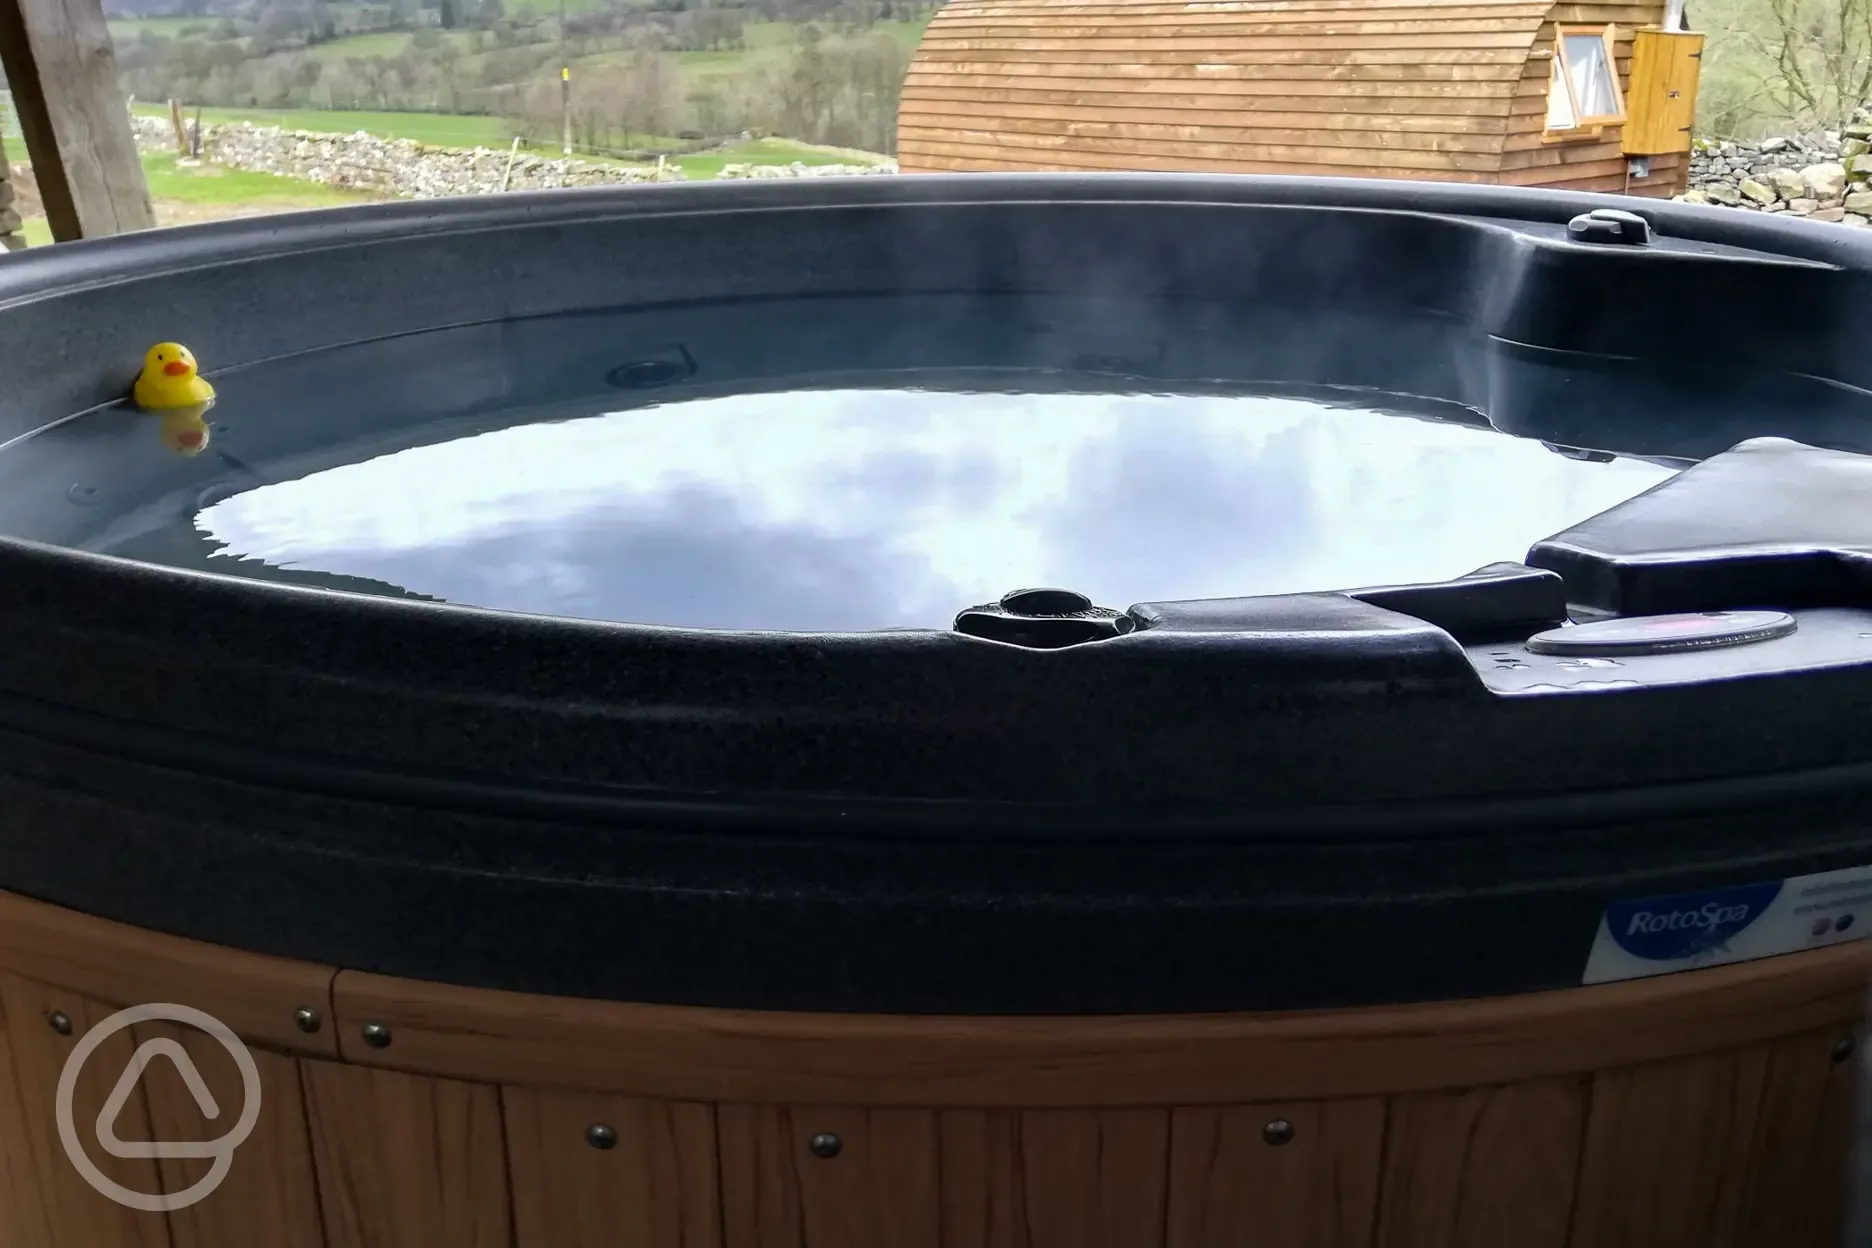 The Plough pod optional hot tub